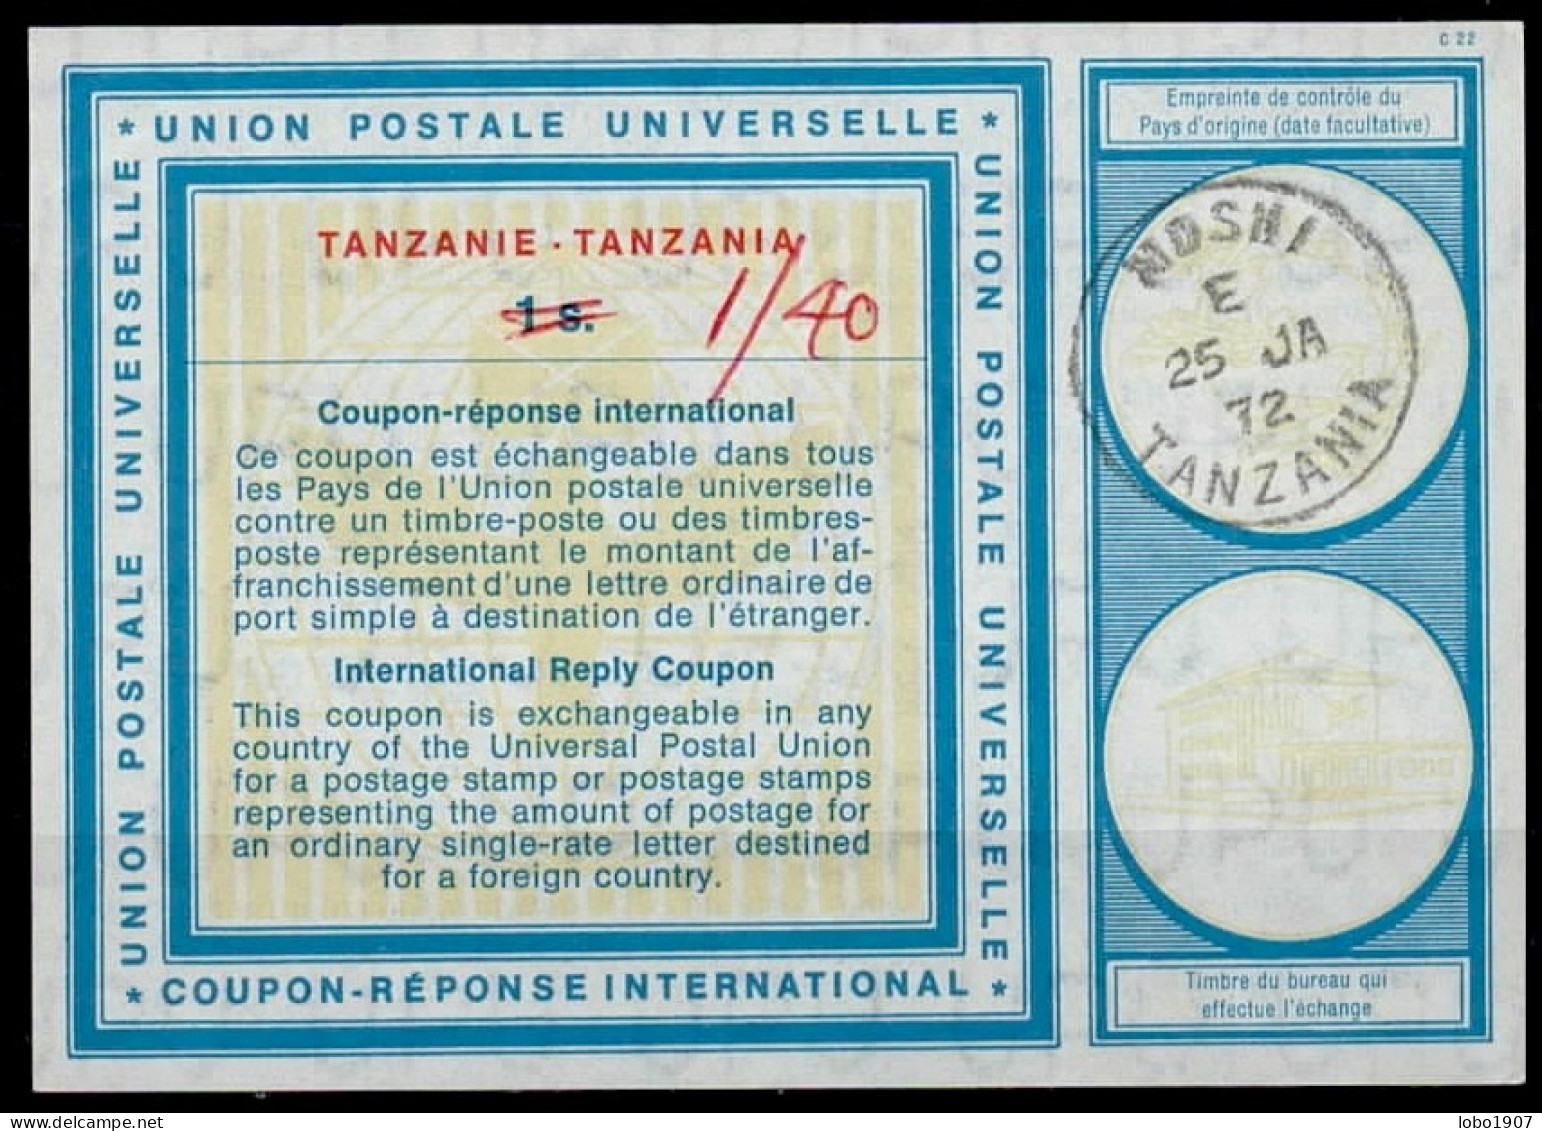 TANZANIE TANZANIA  Vi19  1/40 On 1s.  International Reply Coupon Reponse Antwortschein IRC IAS  MOSCHI 25.01.72 - Tanzanie (1964-...)